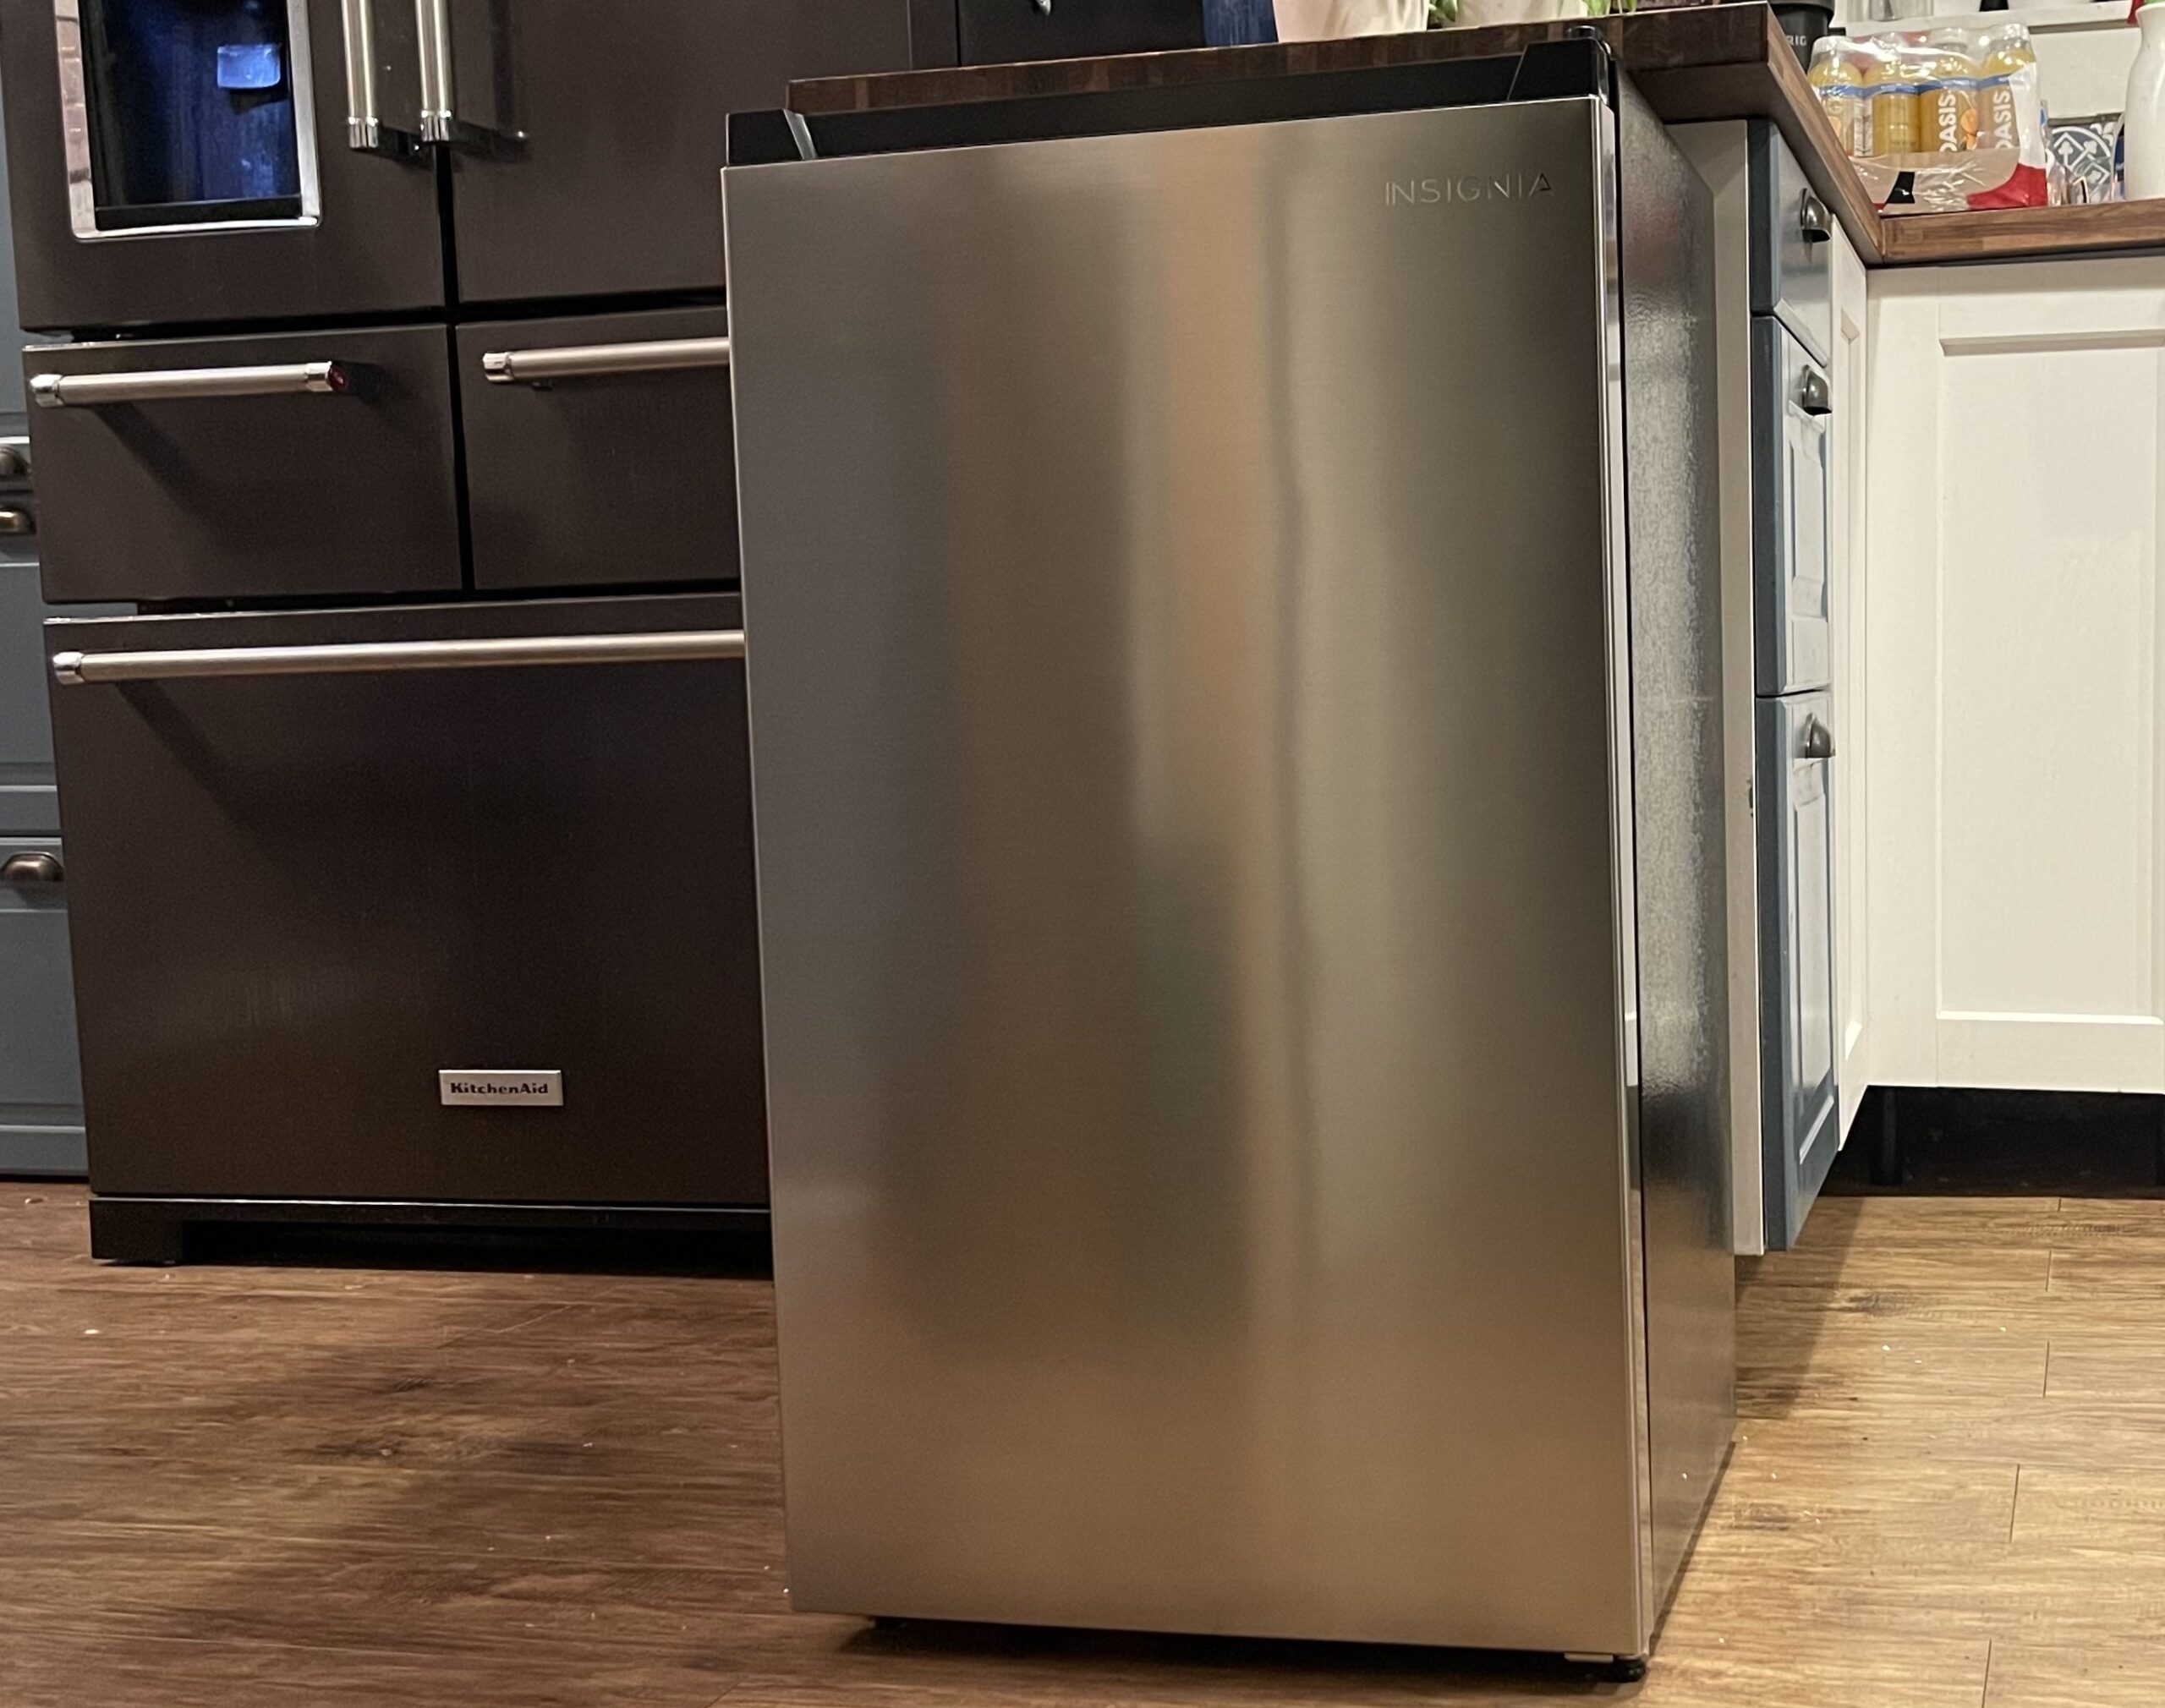 Insignia mini fridge review